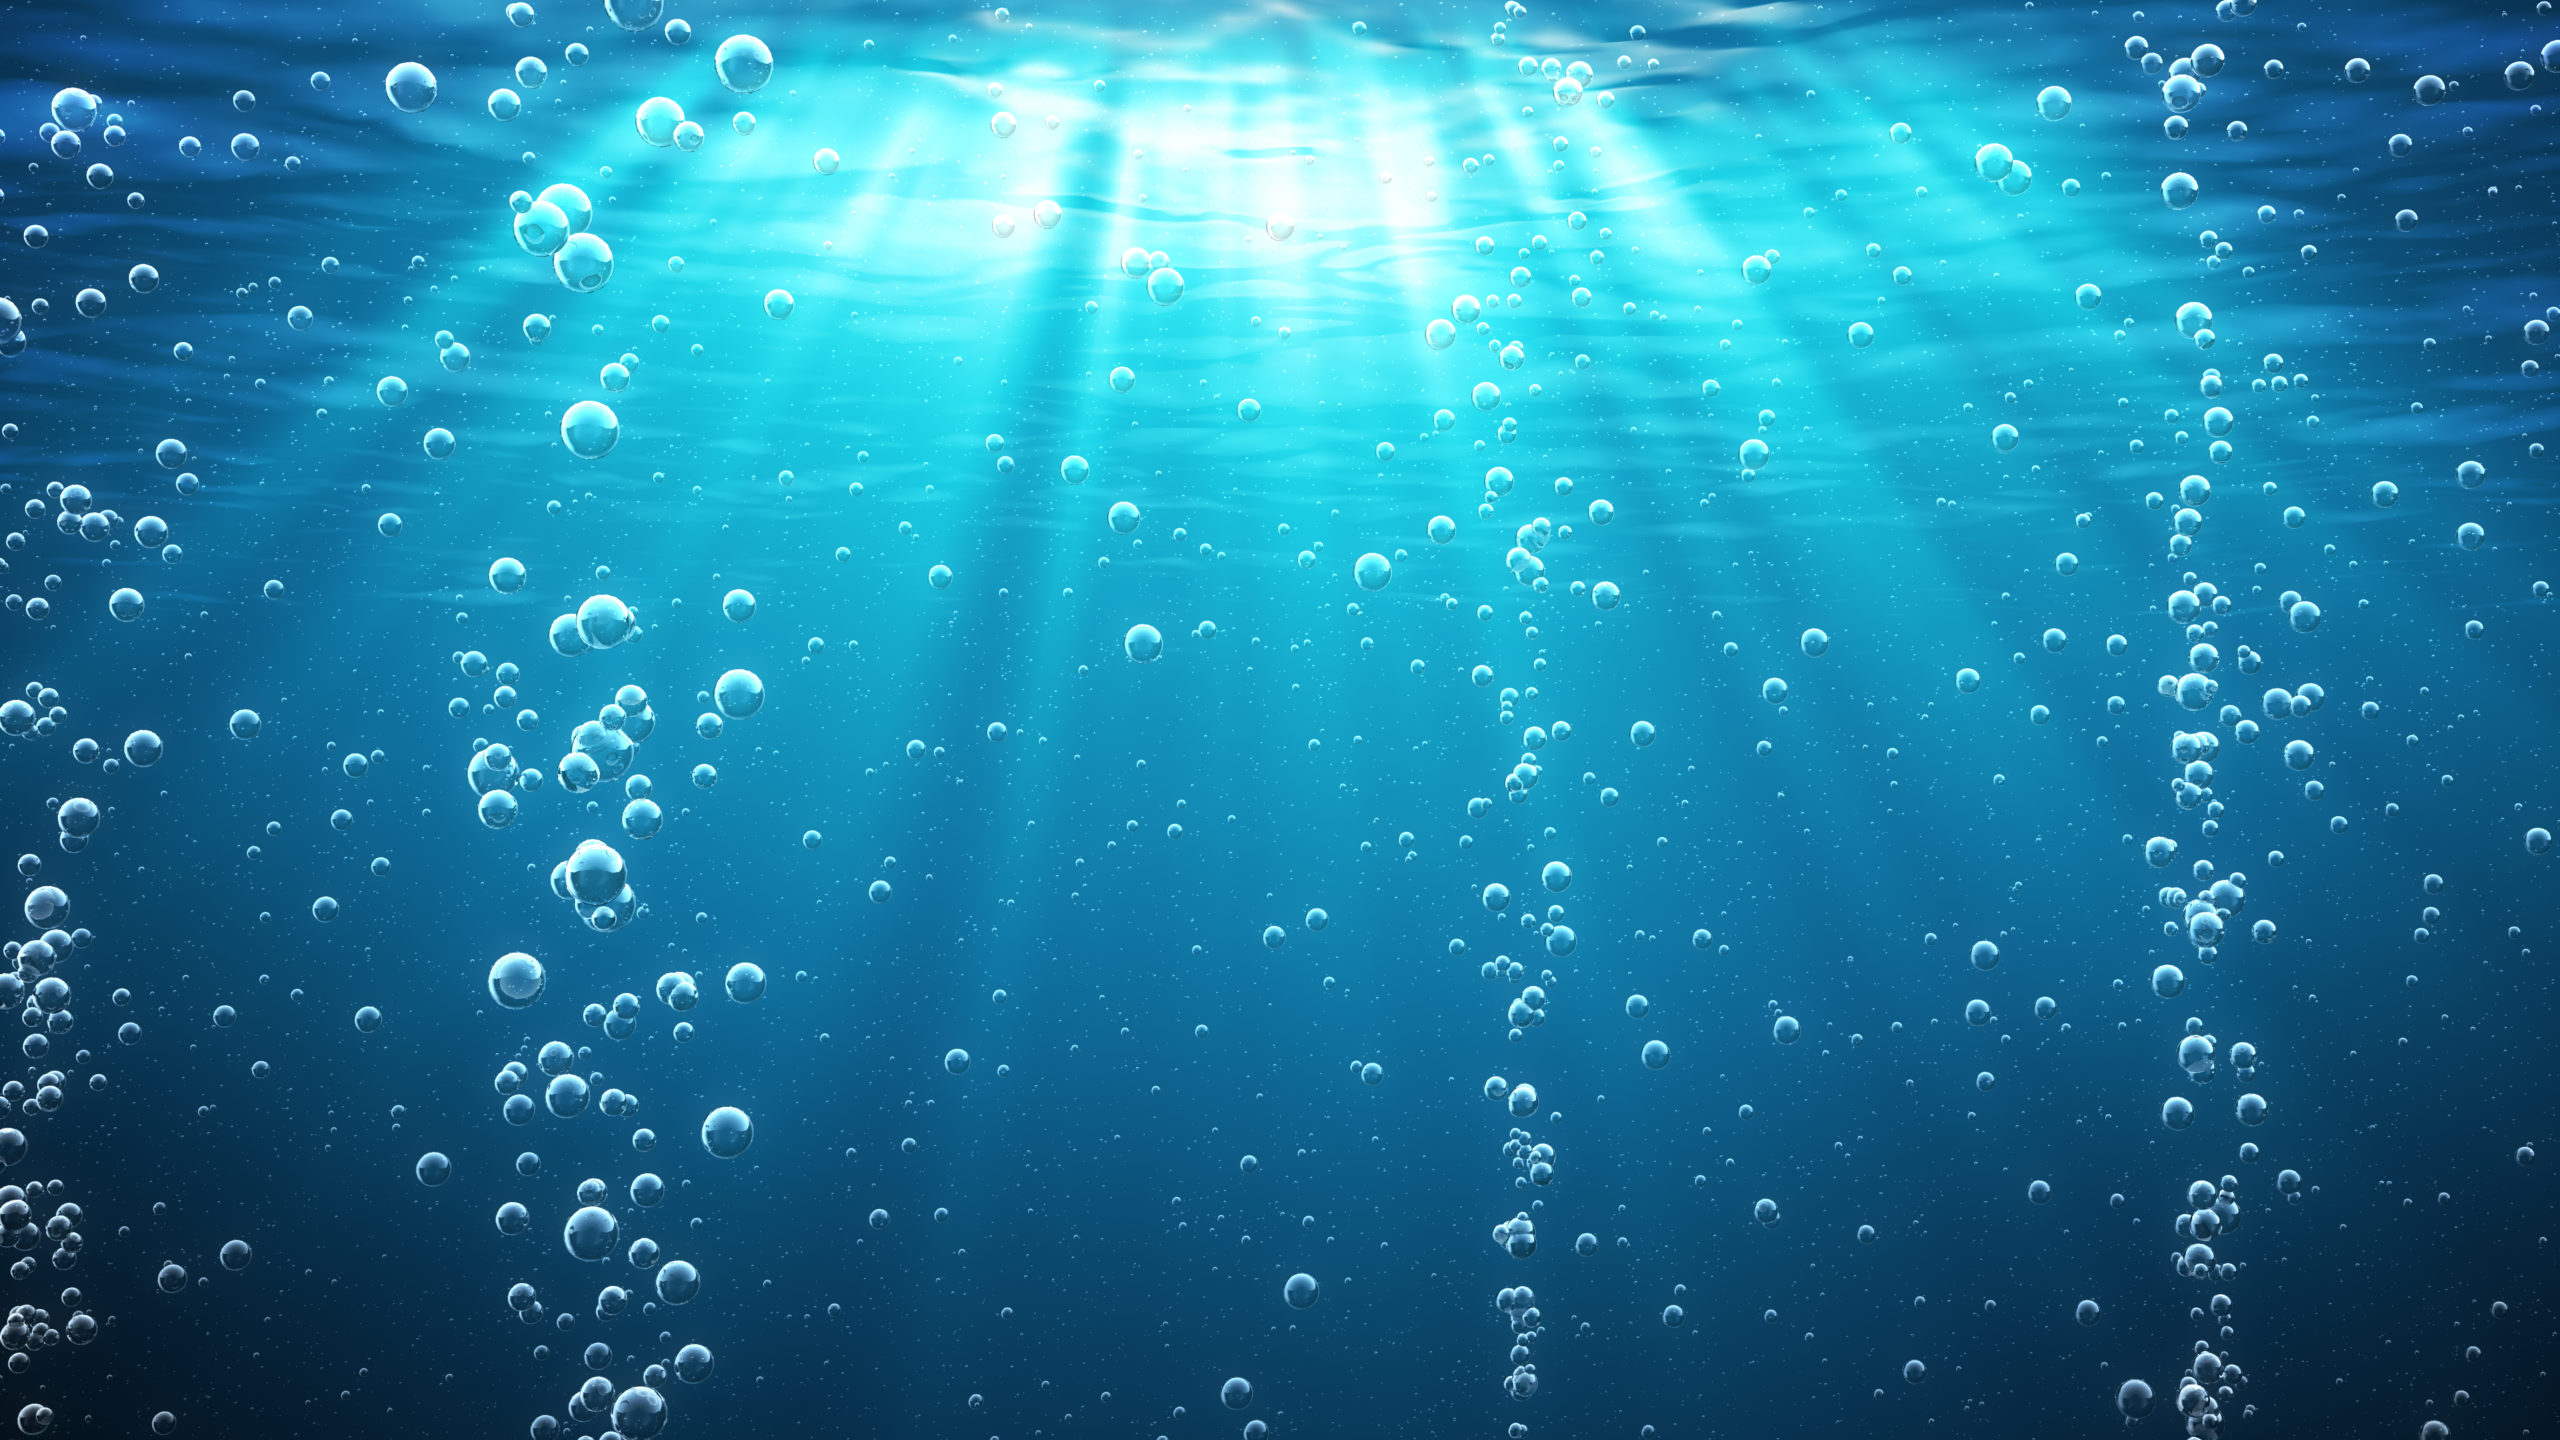 Ocean Alkalinity Enhancement R&D Program Launches